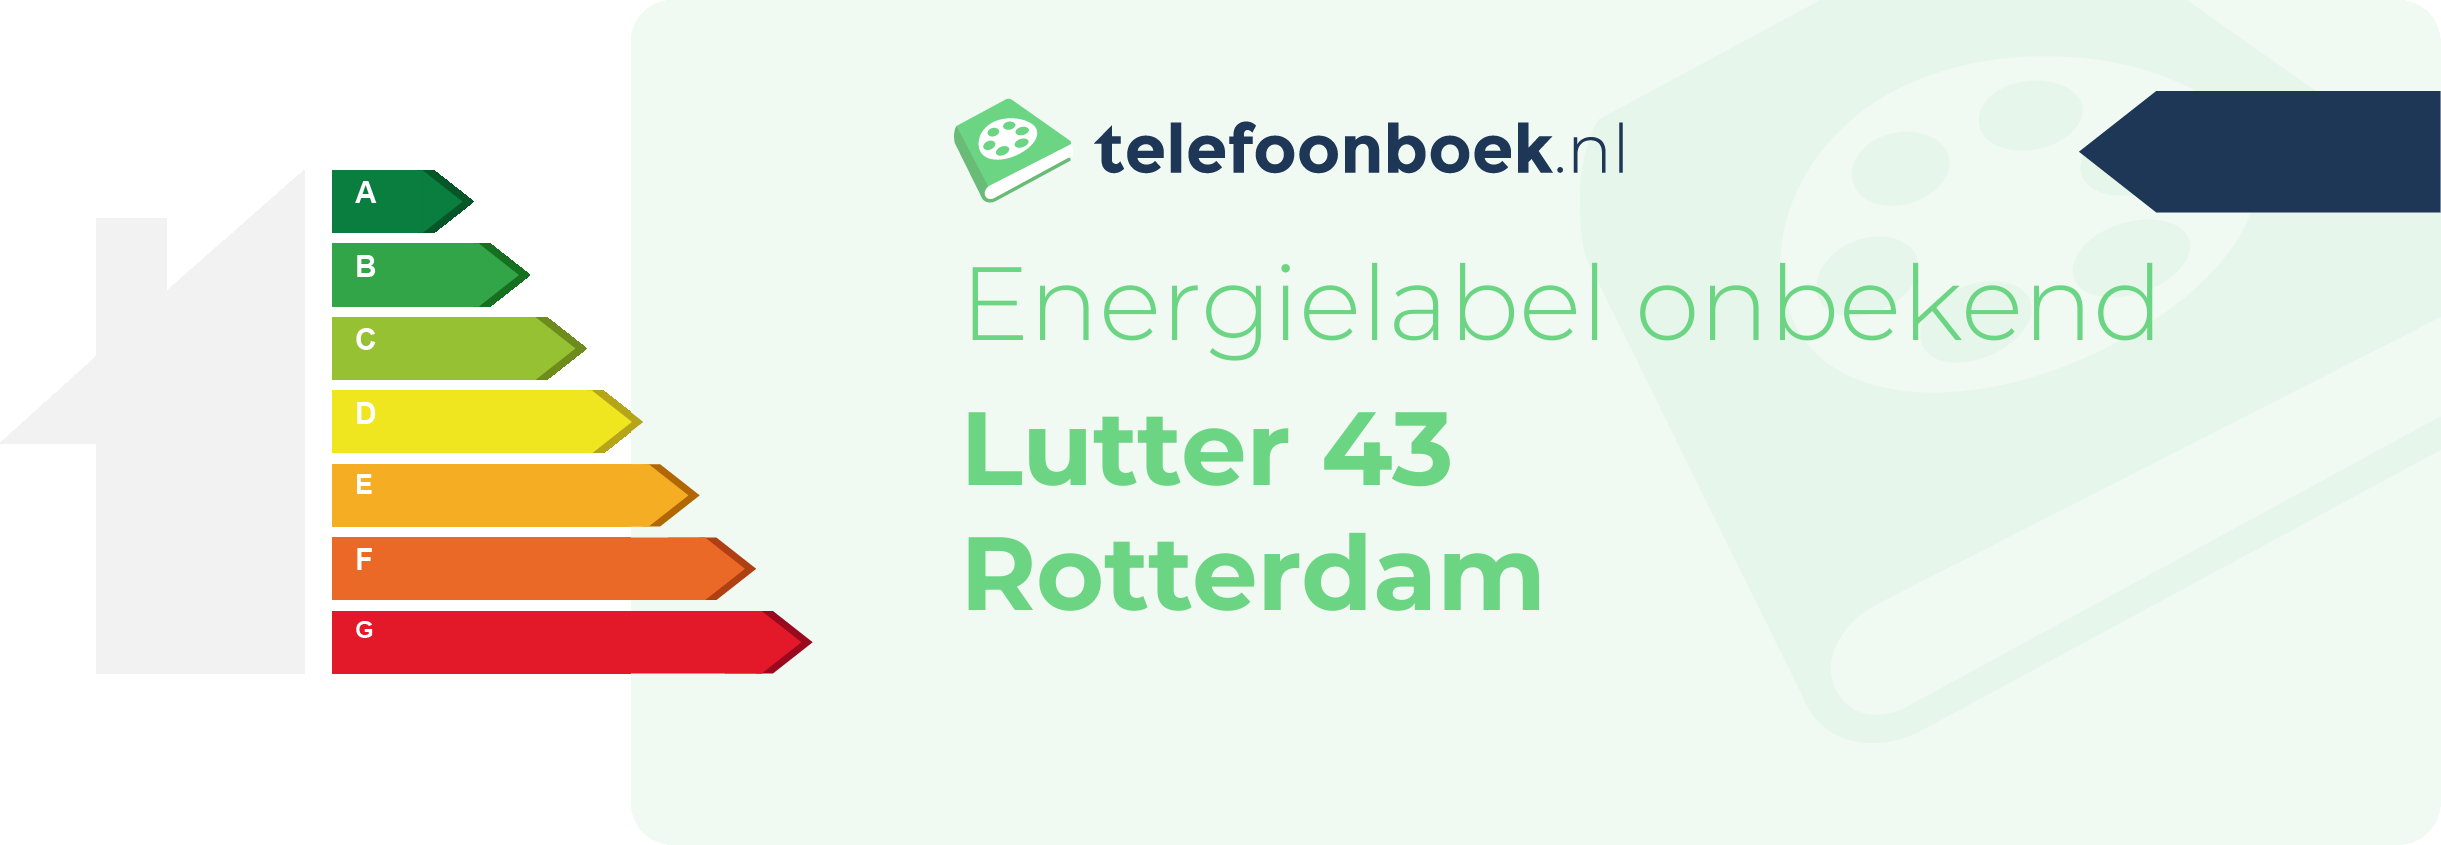 Energielabel Lutter 43 Rotterdam